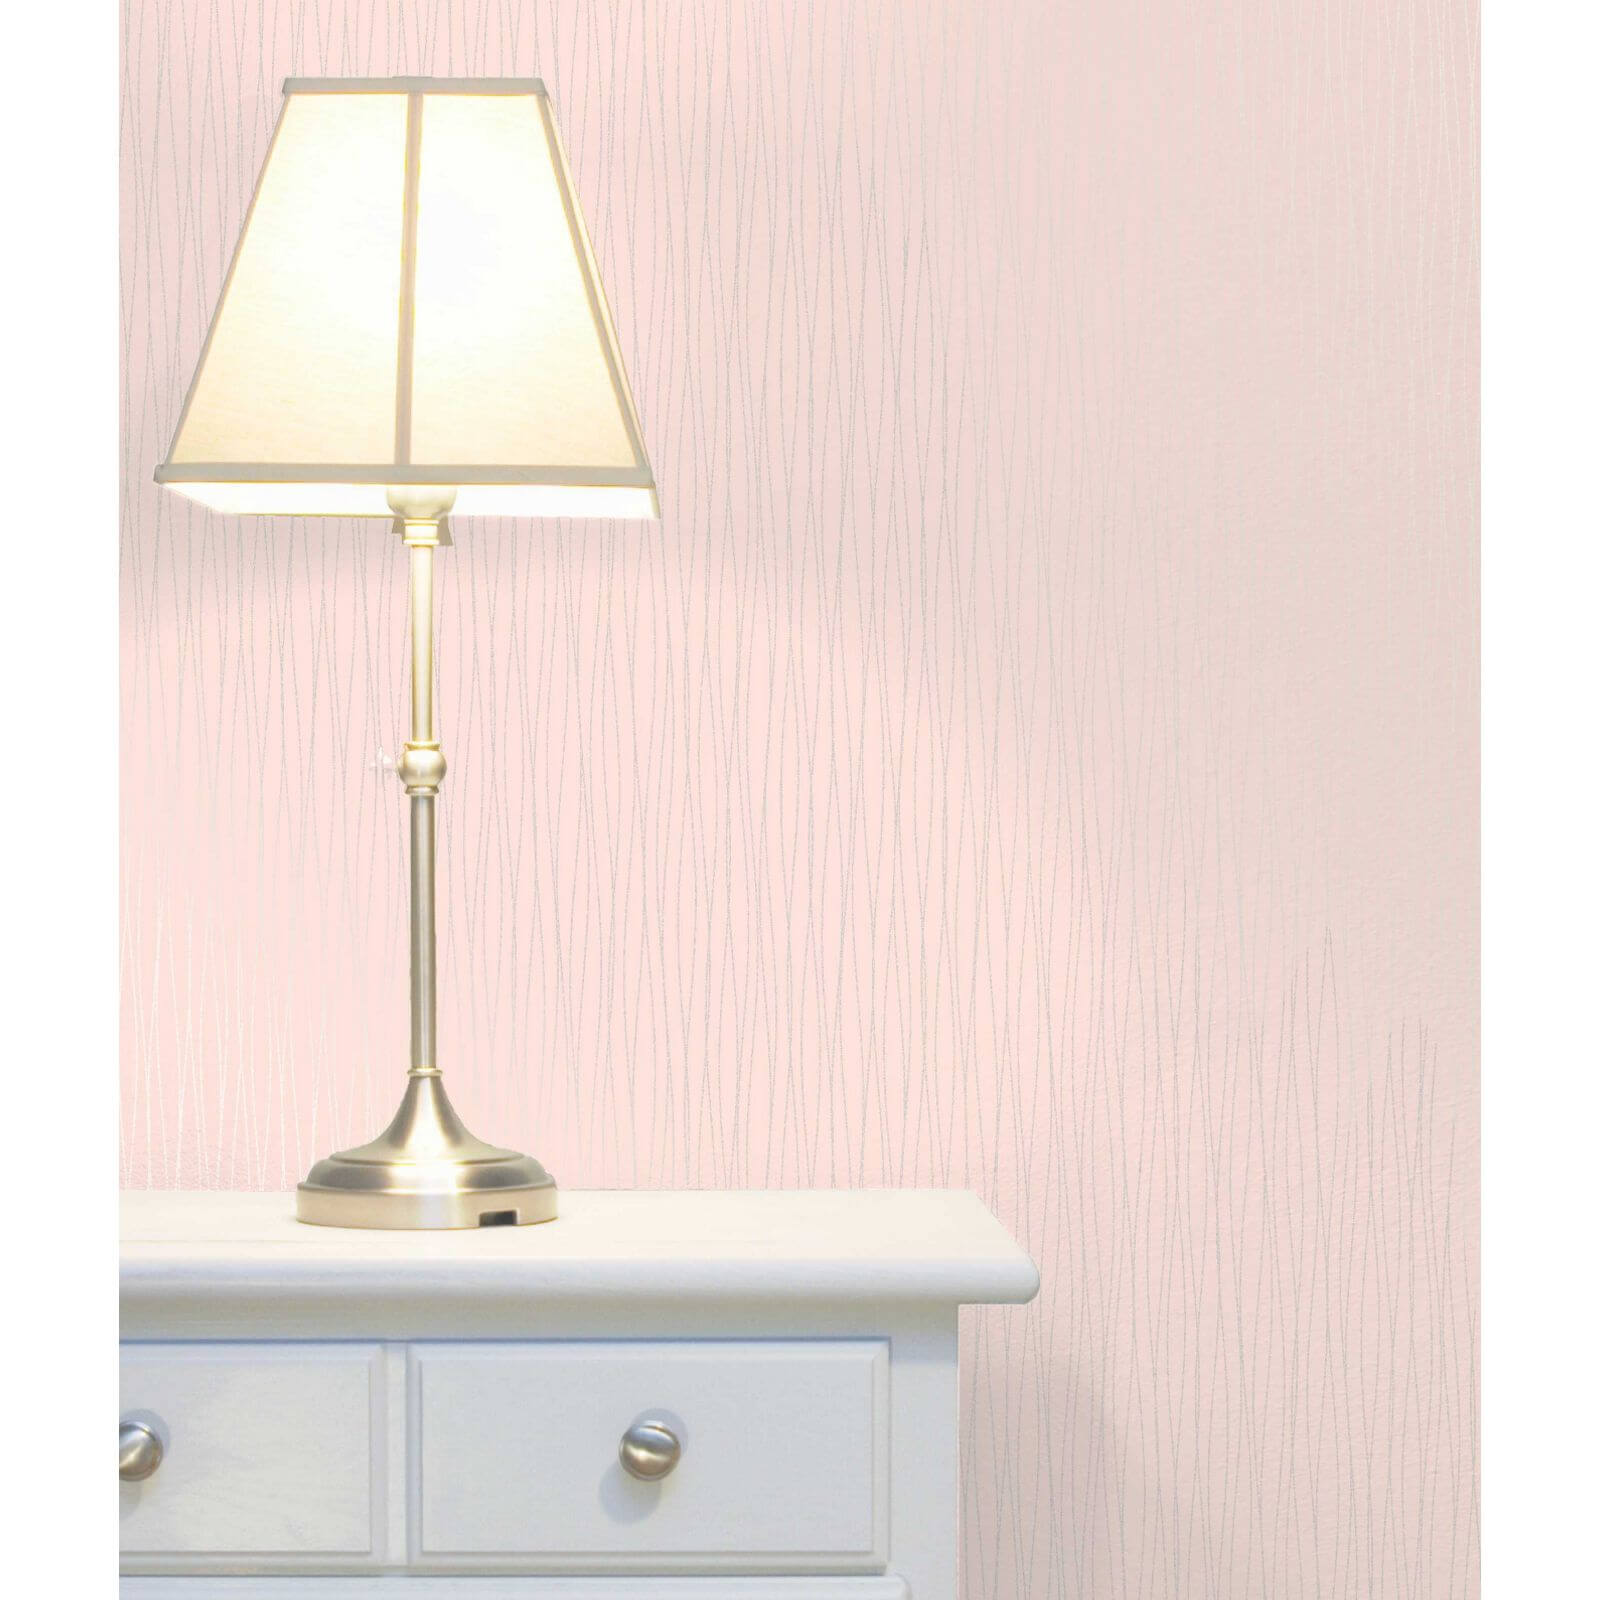 Fine Decor Sparkle Linear Stripe Pink Wallpaper